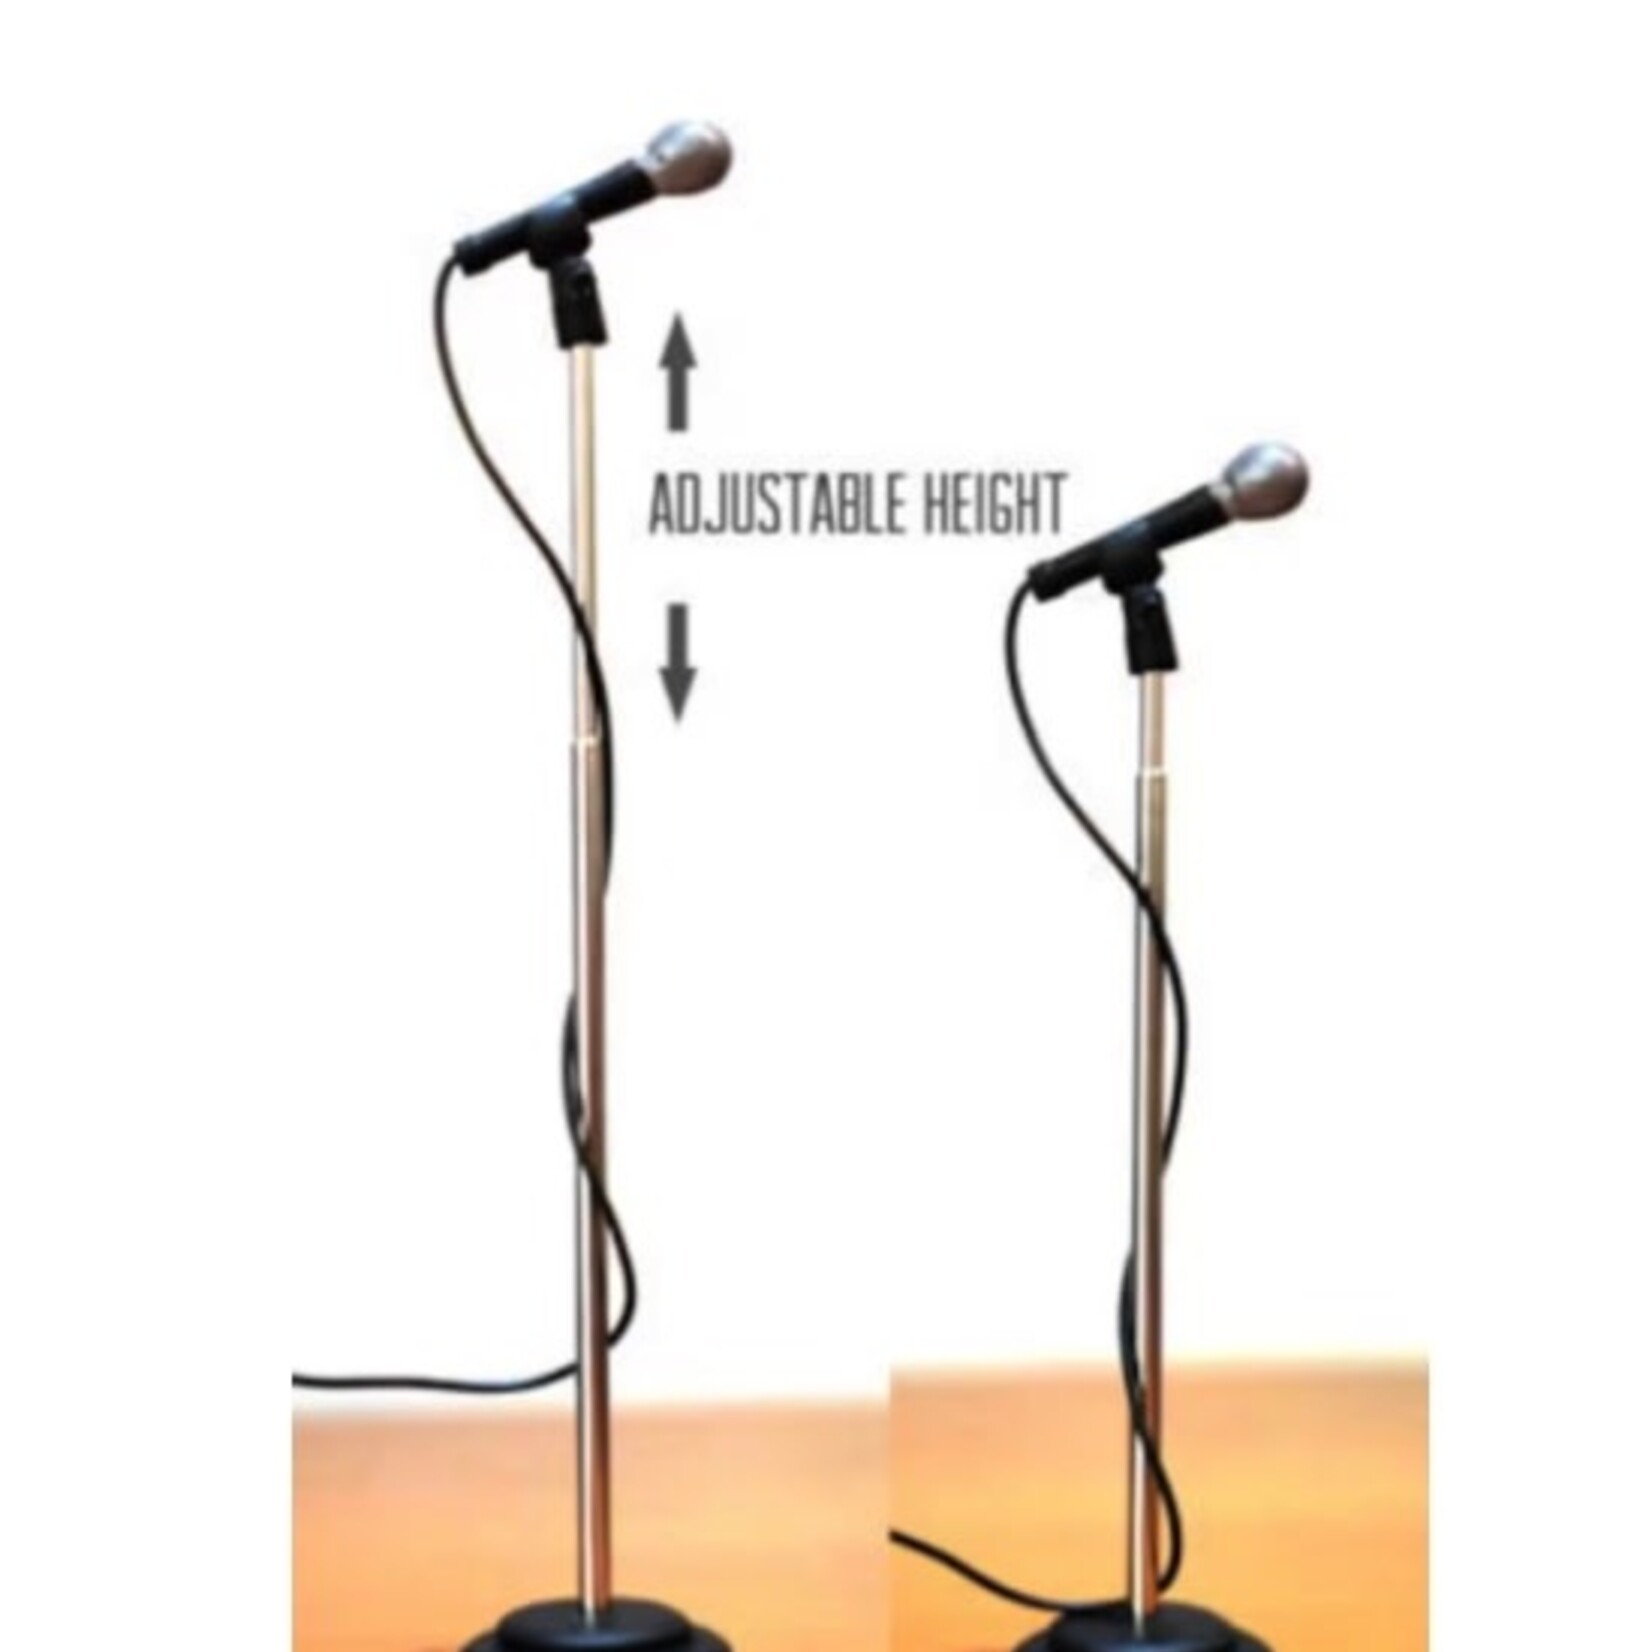 AMAZON Adjustable Height Miniature Microphones